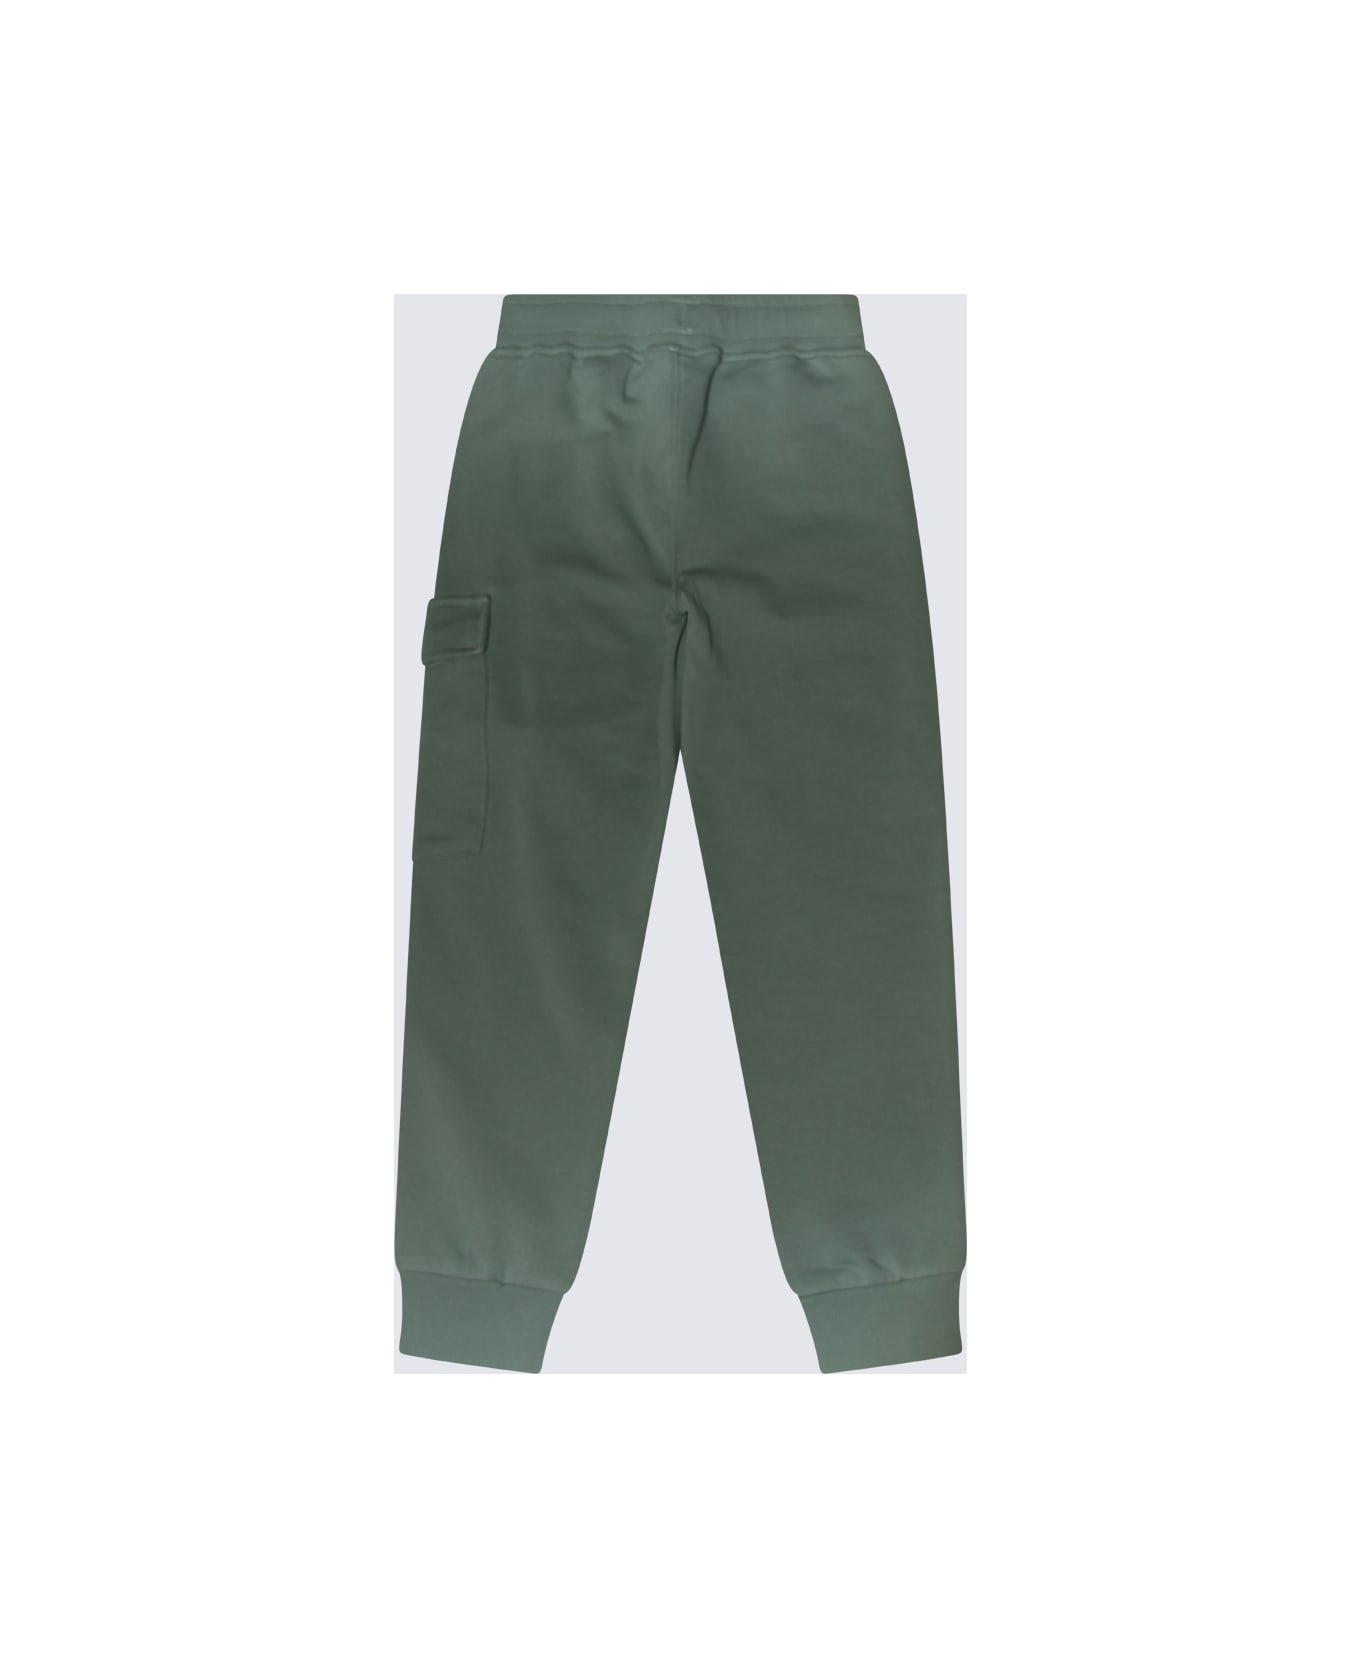 C.P. Company Undersixteen Green Cotton Pants - Green Bay